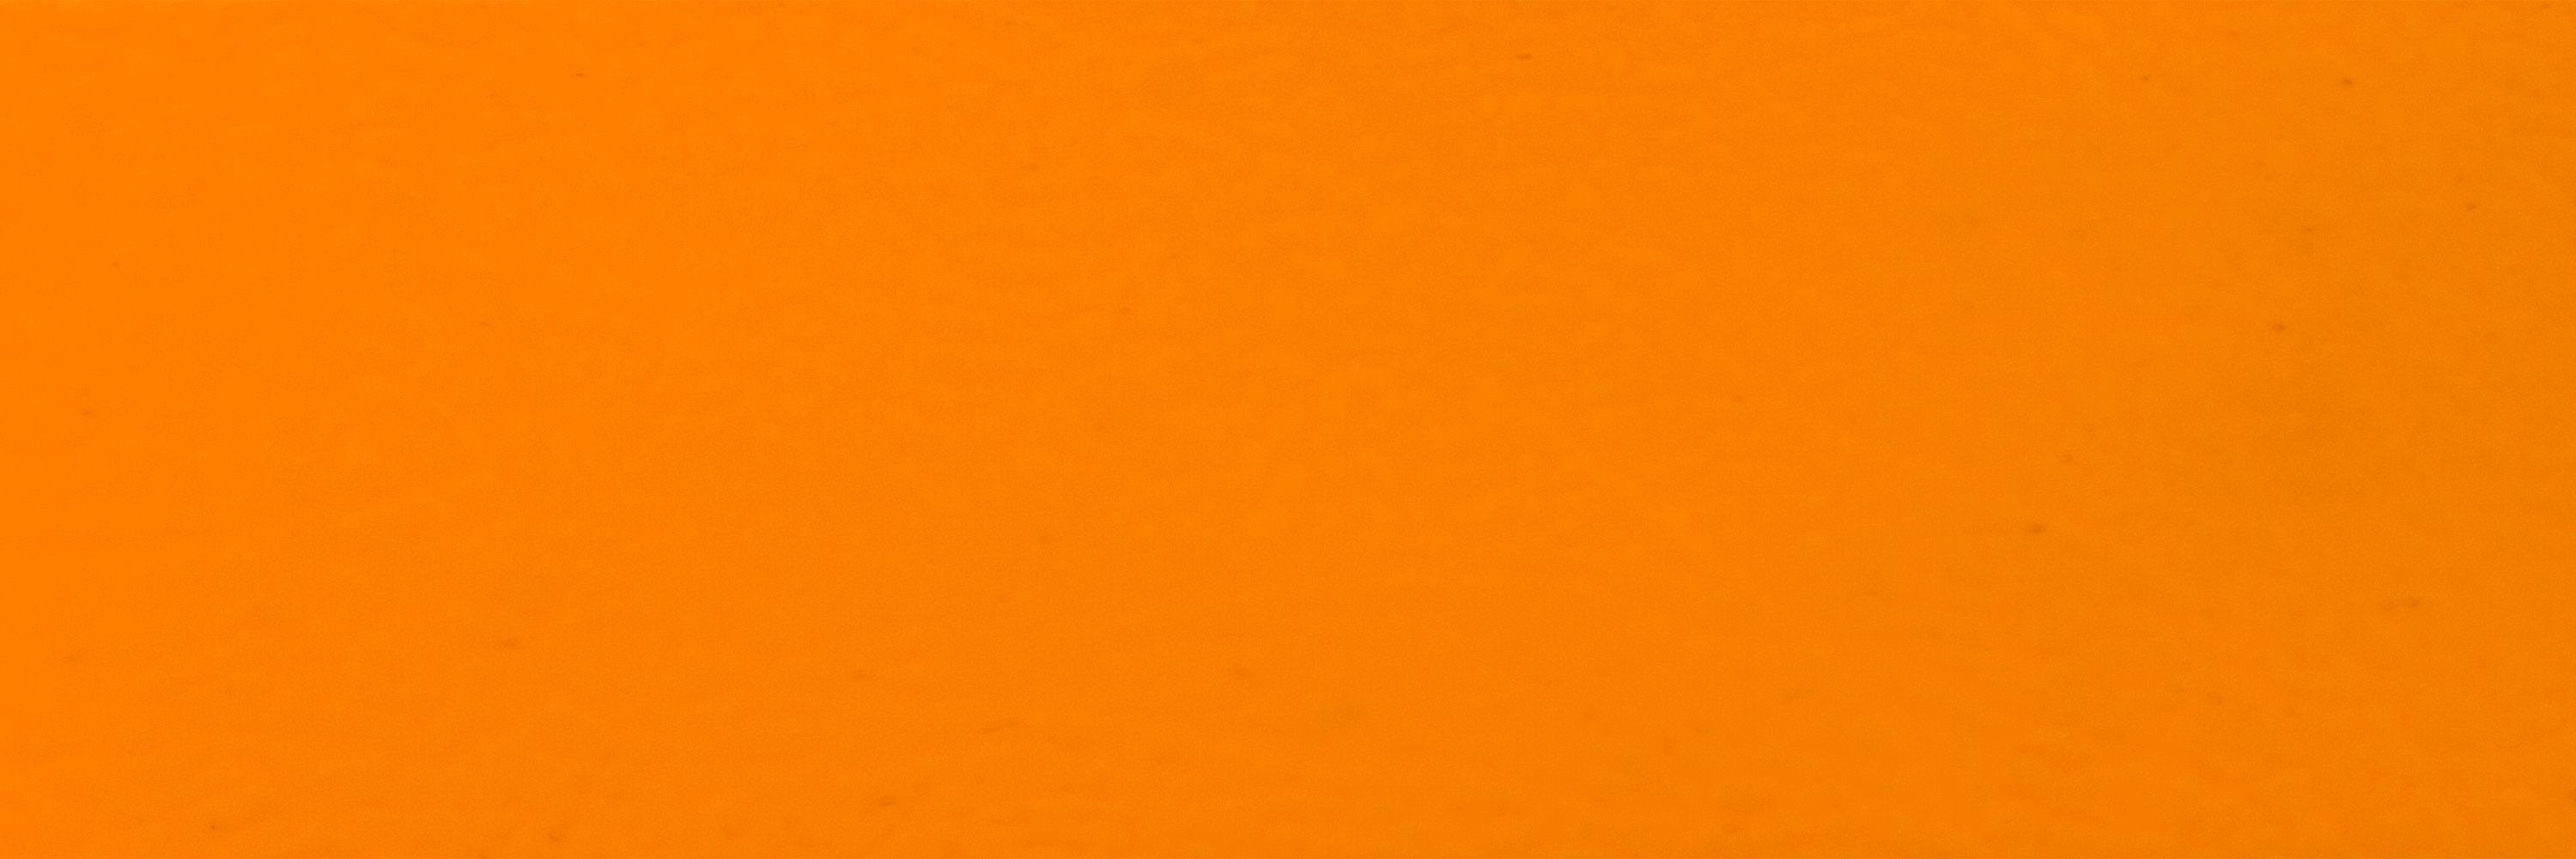 Pastell-Orange